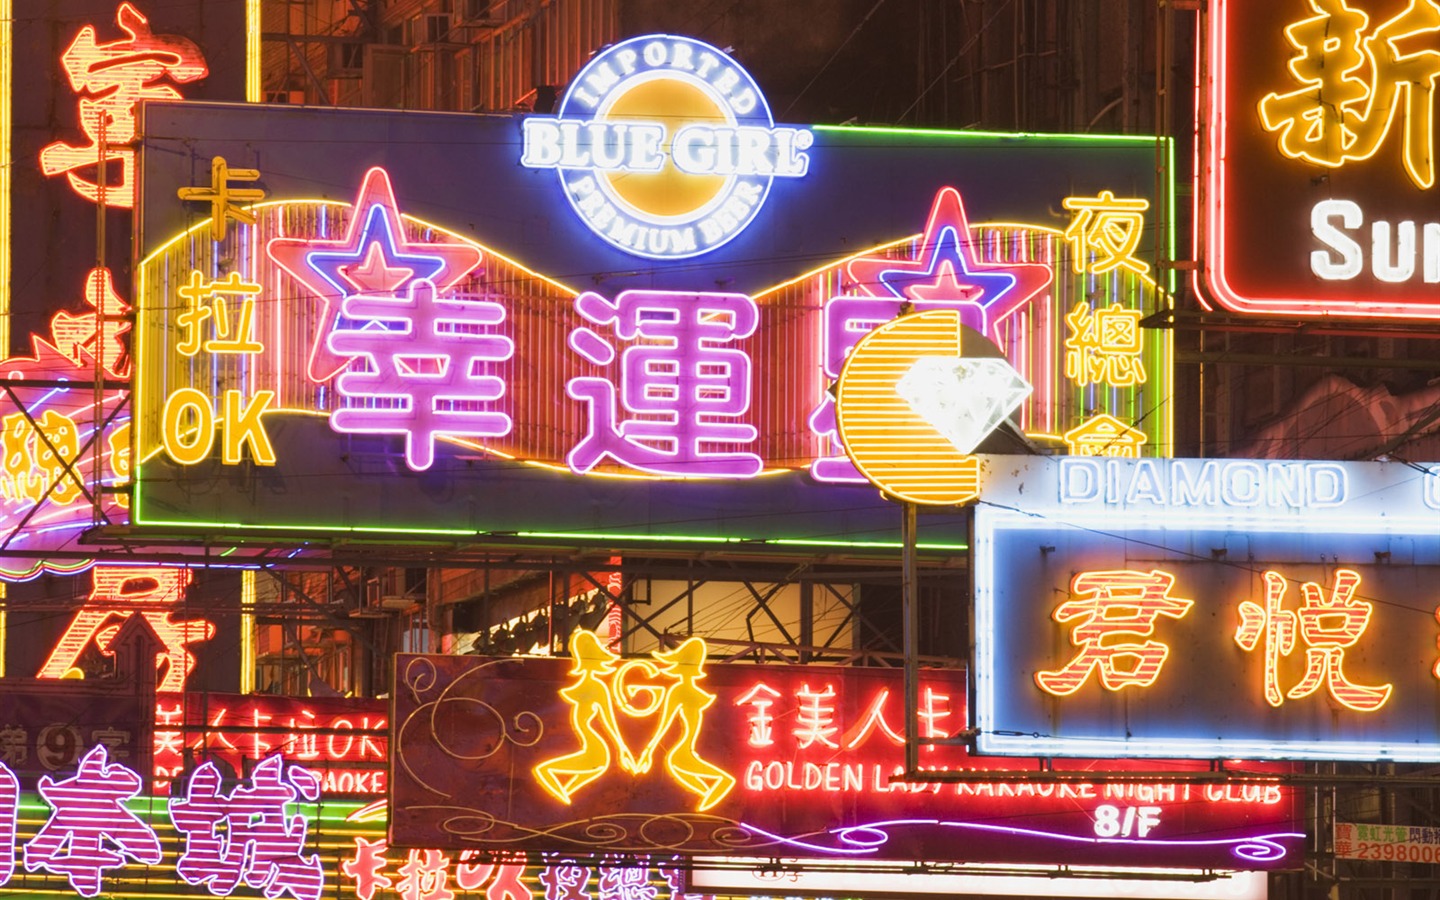 Vistazo de fondos de pantalla urbanas de China #3 - 1440x900